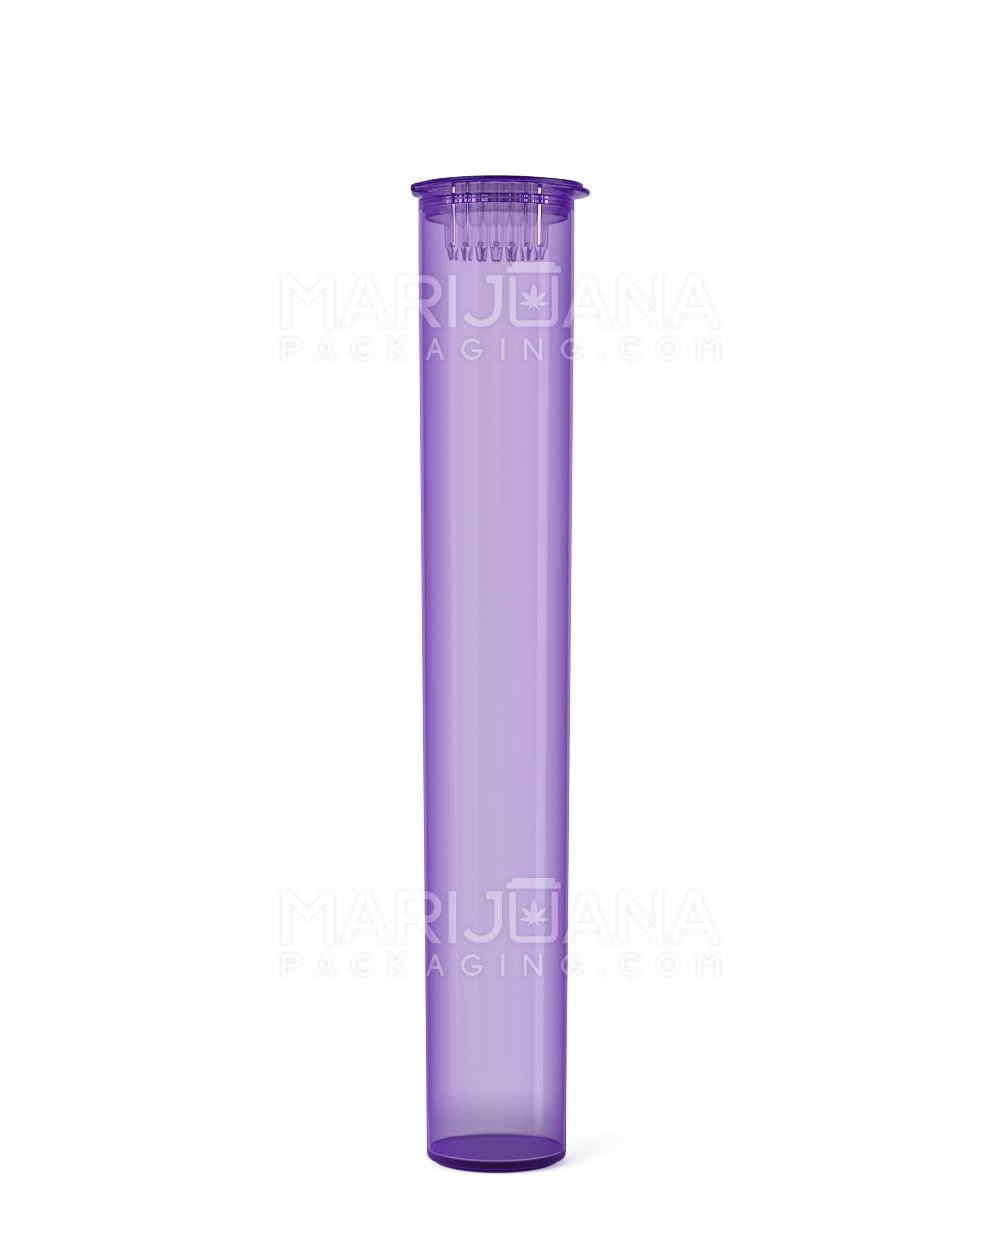 Child Resistant | King Size Pop Top Translucent Plastic Pre-Roll Tubes | 116mm - Purple - 1000 Count - 2